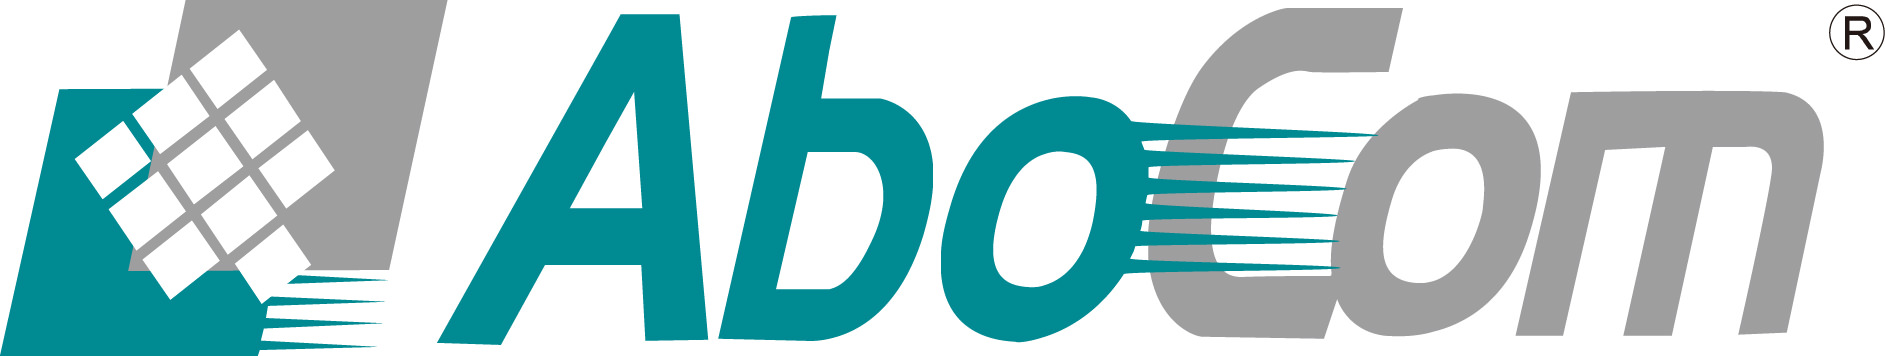 AboCom_logo